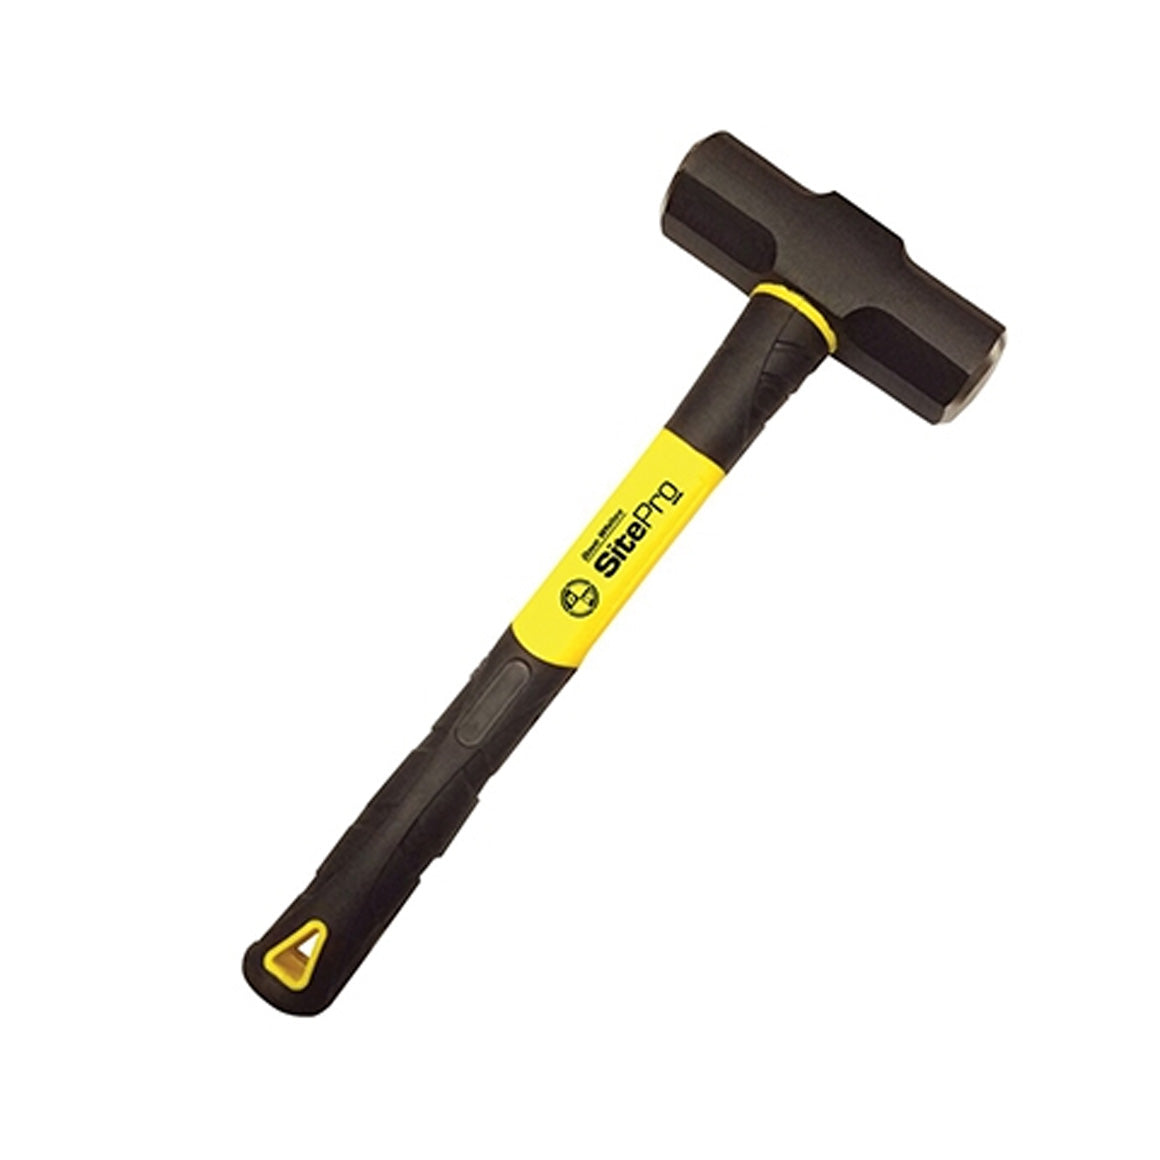 SitePro 64oz Engineer Hammer with Fiberglass Handle Part Number:17-RF64E